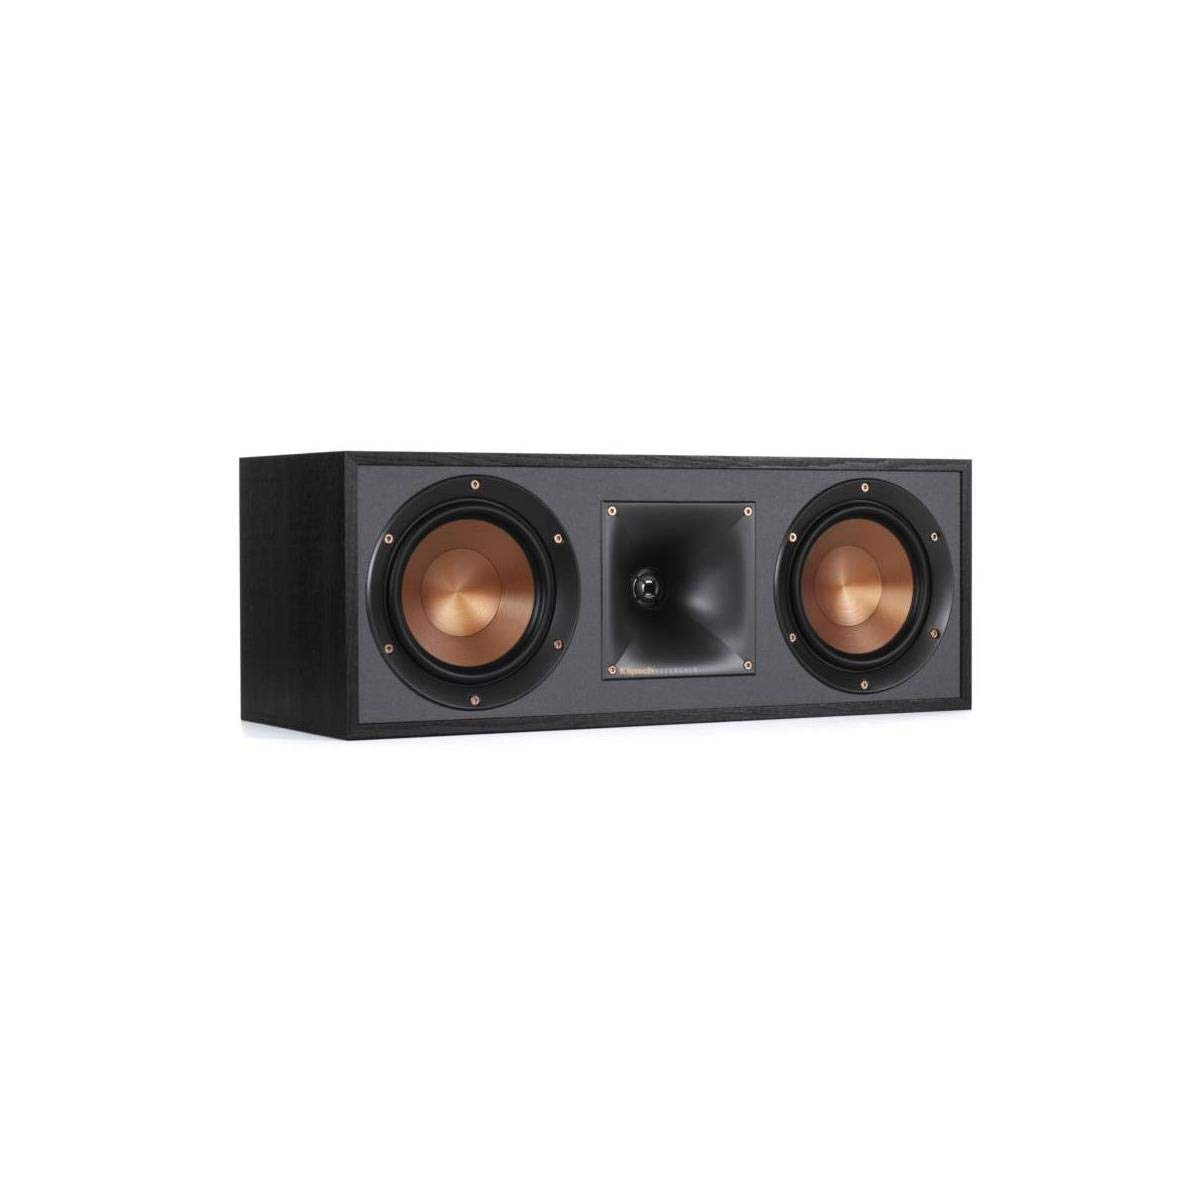 Klipsch Reference 5.2 Home Theater System Bundle with 2X R-620F Floorstanding Speaker, R-52C Center Channel Speaker, 2X R-41M Bookshelf Speaker, 2X R-12SW Subwoofer, AVR-S970H 7.2 Receiver, Black